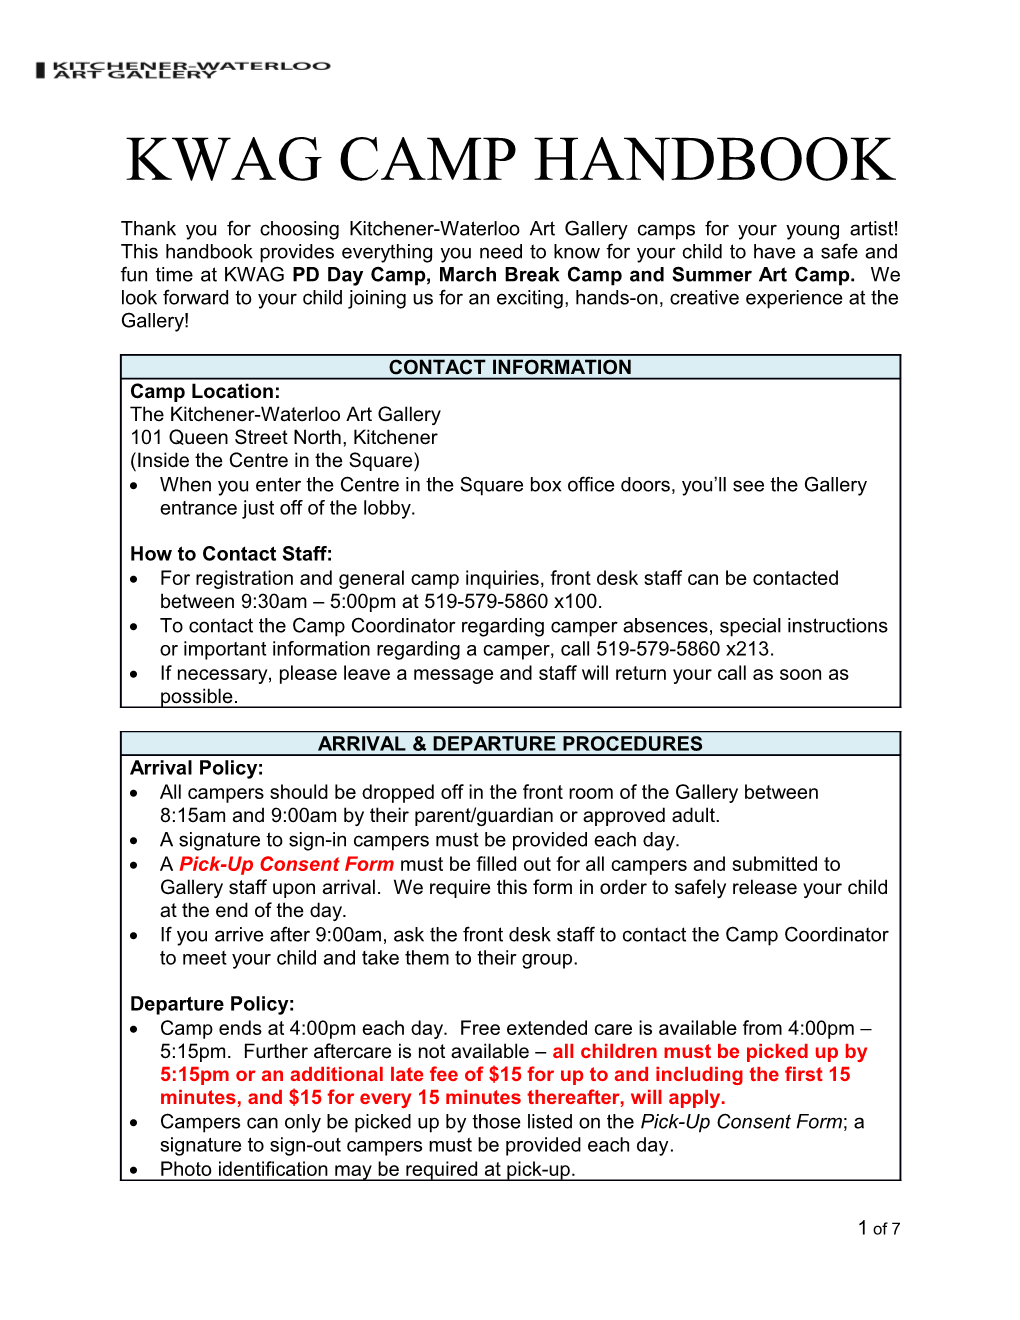 Kwagcamp Handbook